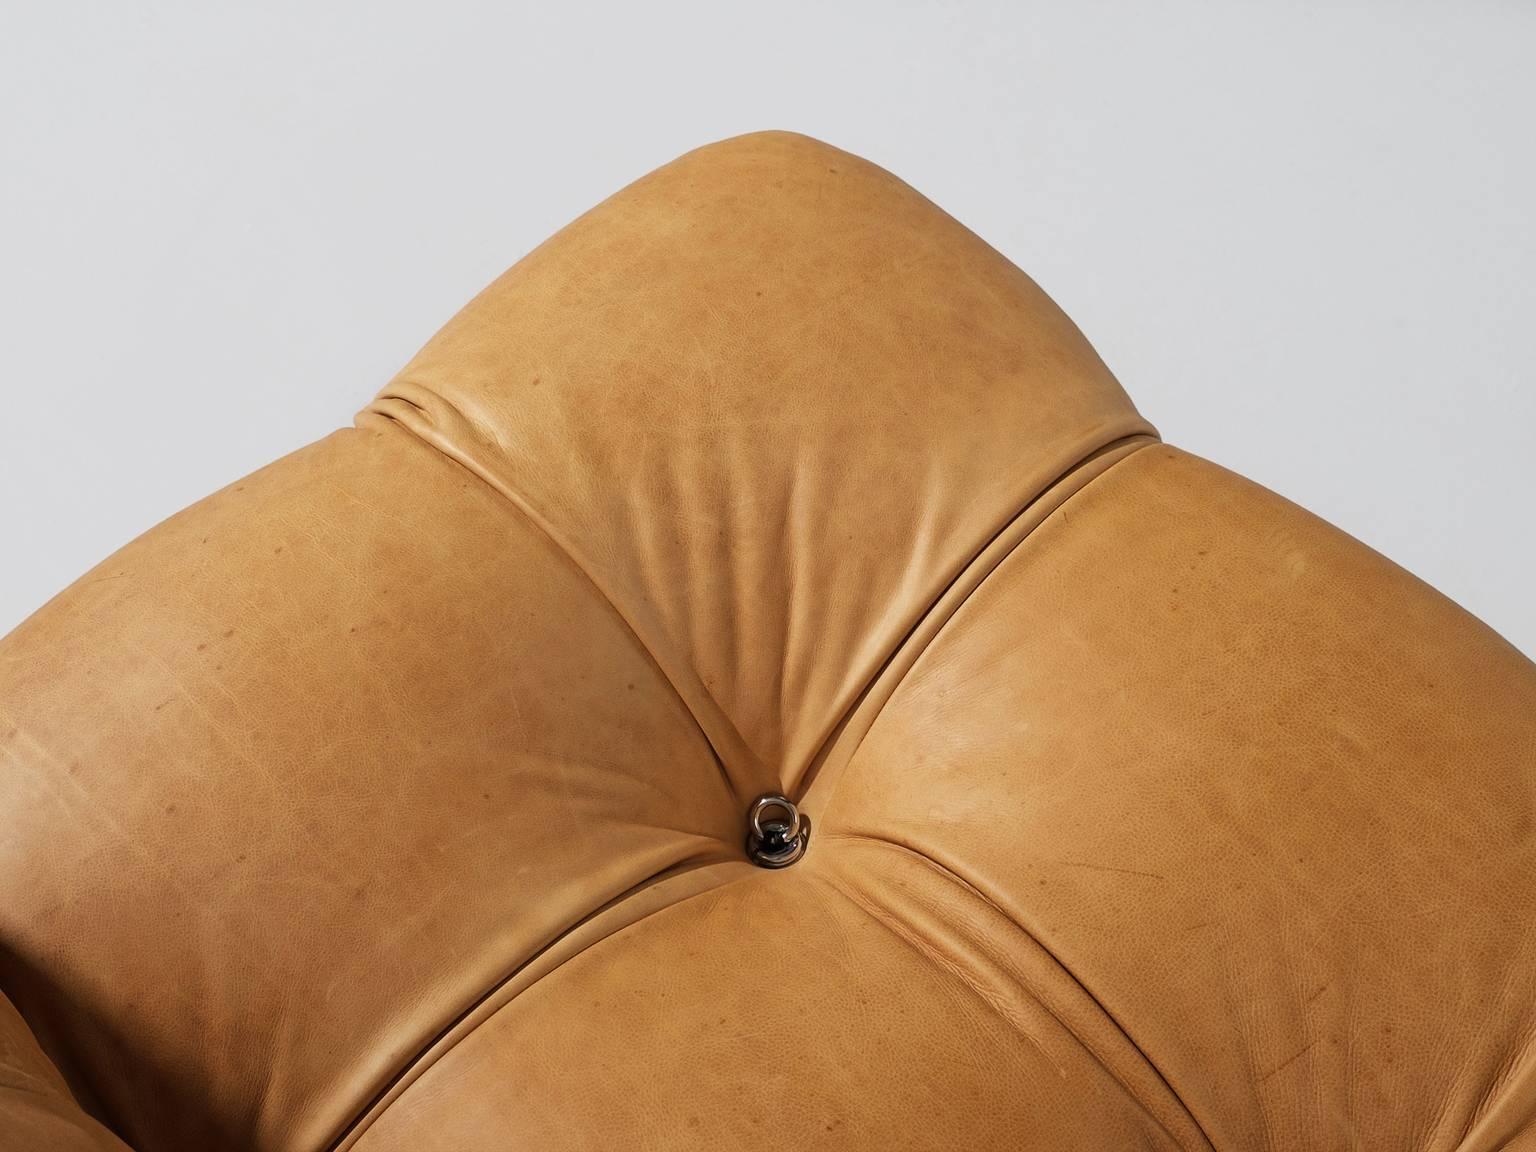 Italian Customizable Mario Bellini 'Camaleonda' Modular Sofa in Cognac Leather